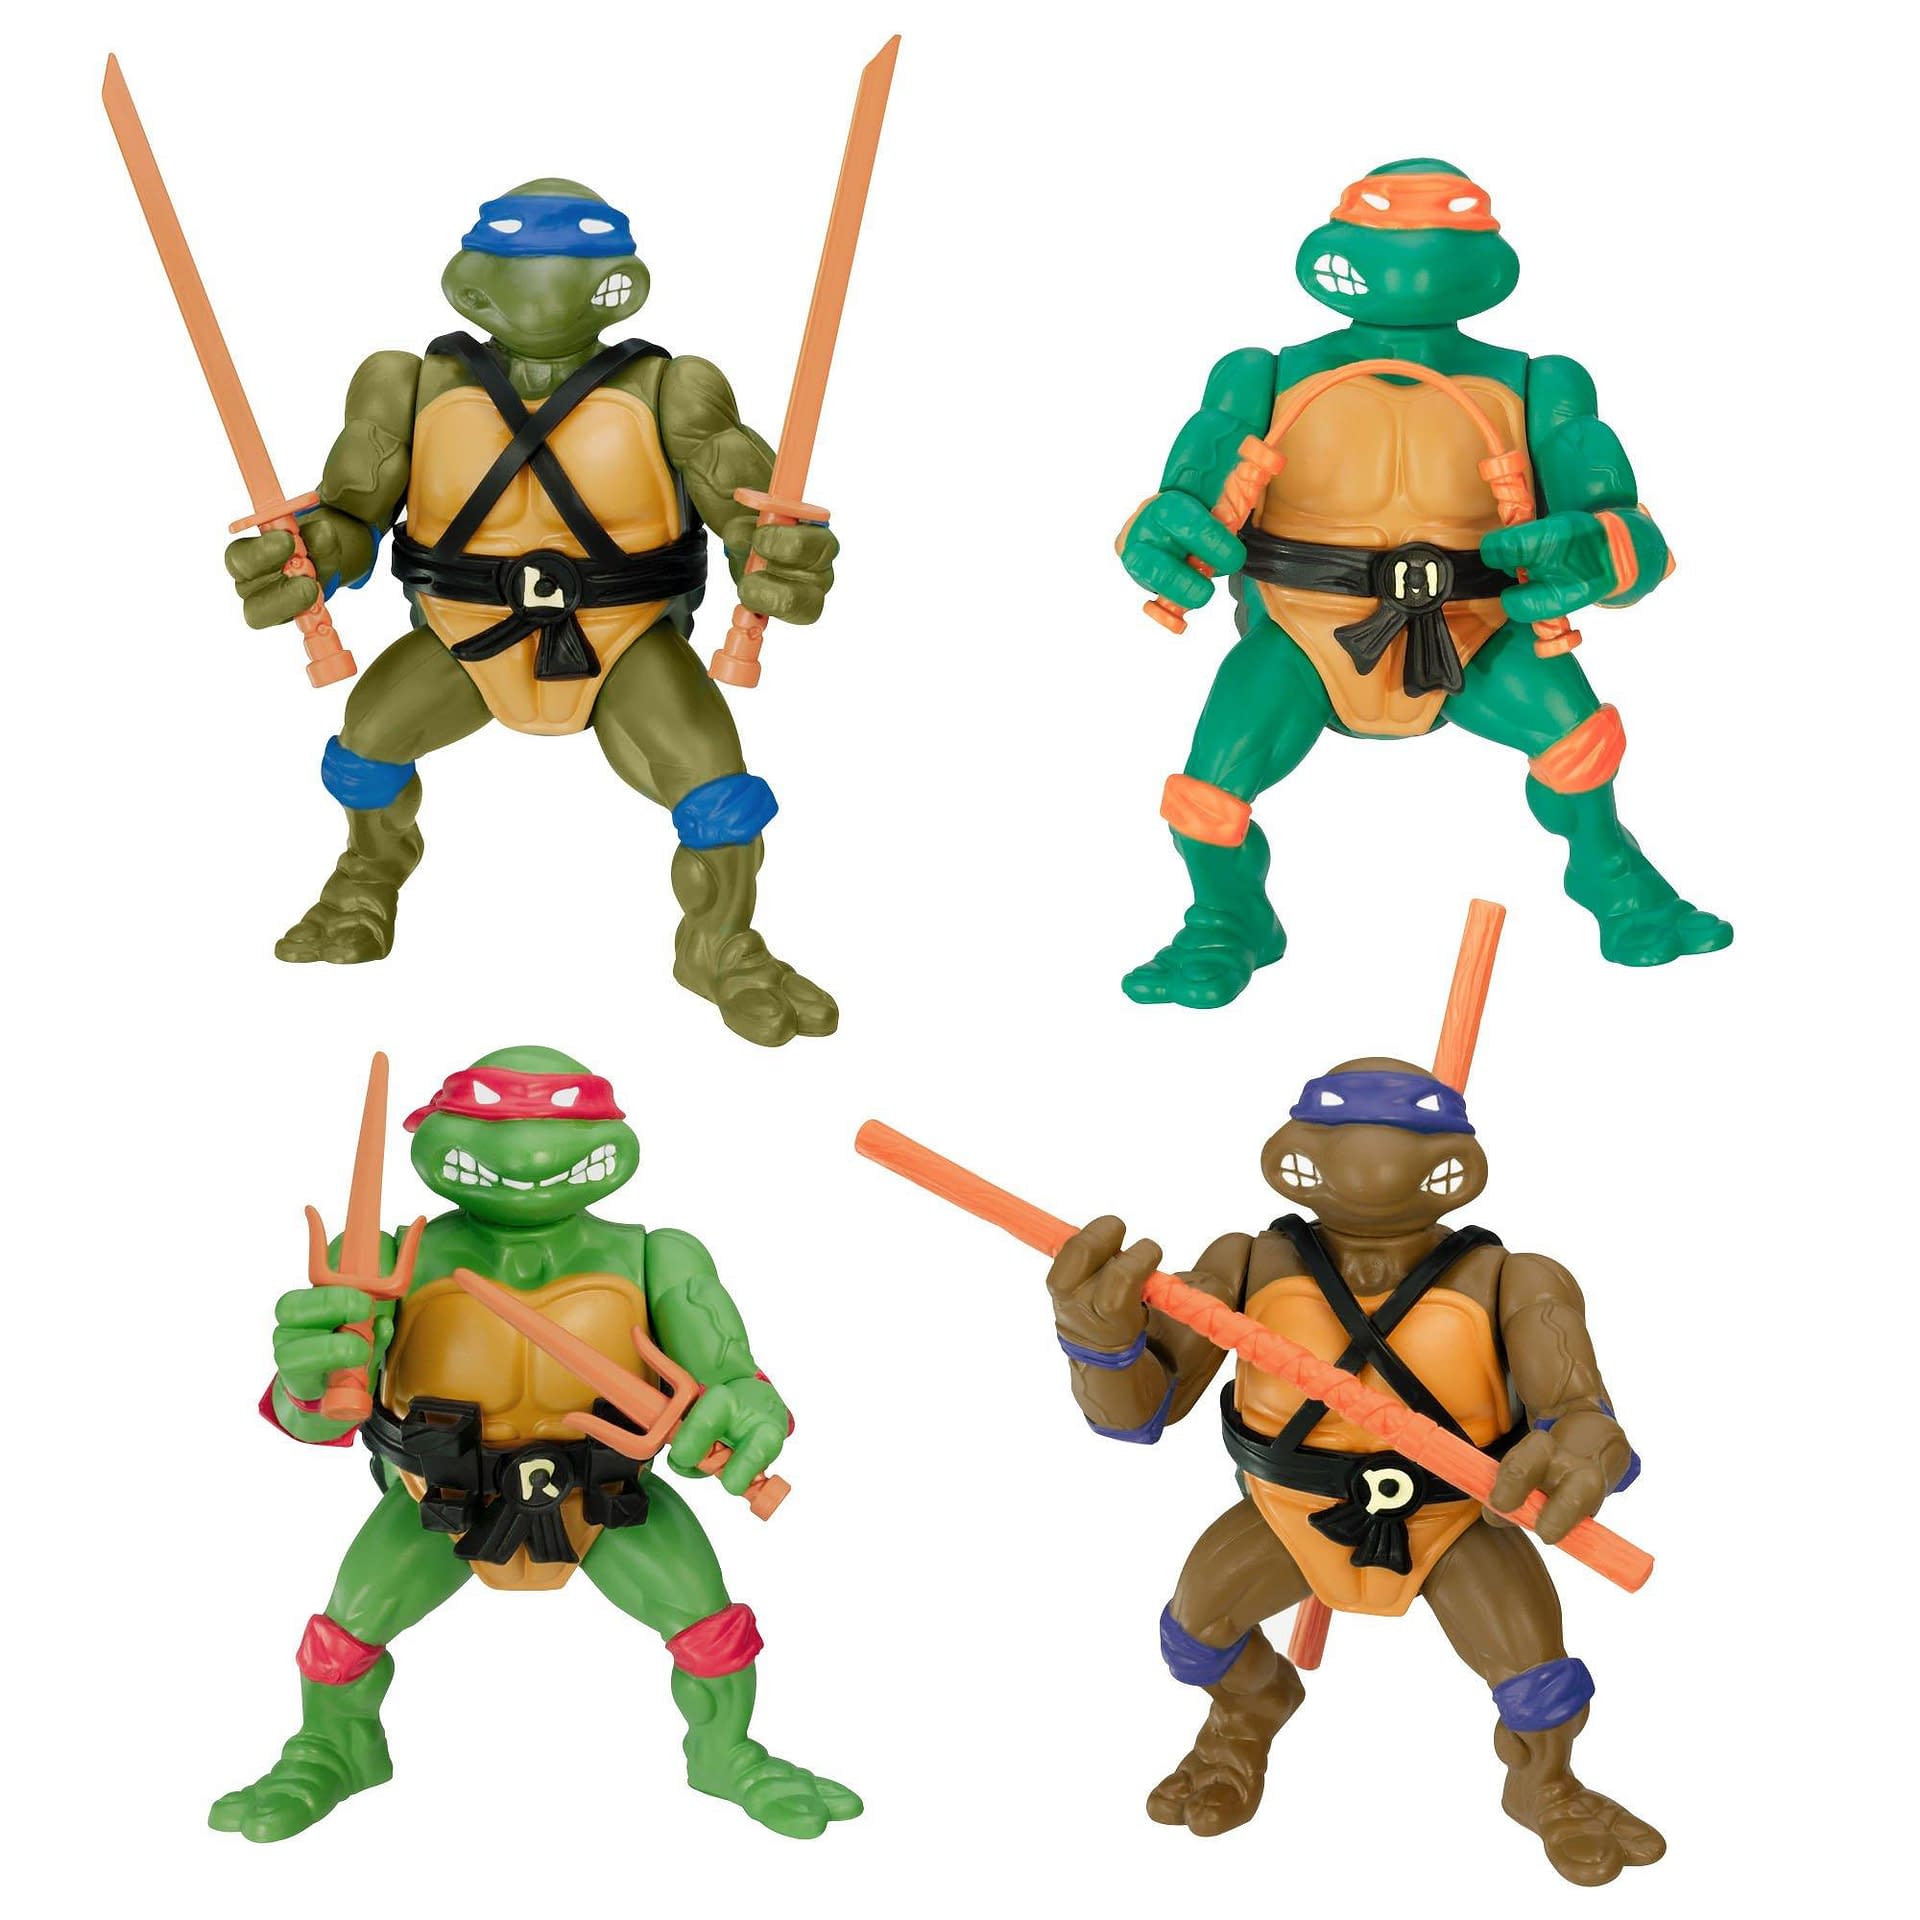 Teenage Mutant Ninja Turtles 1980s Figures Return with Gamestop